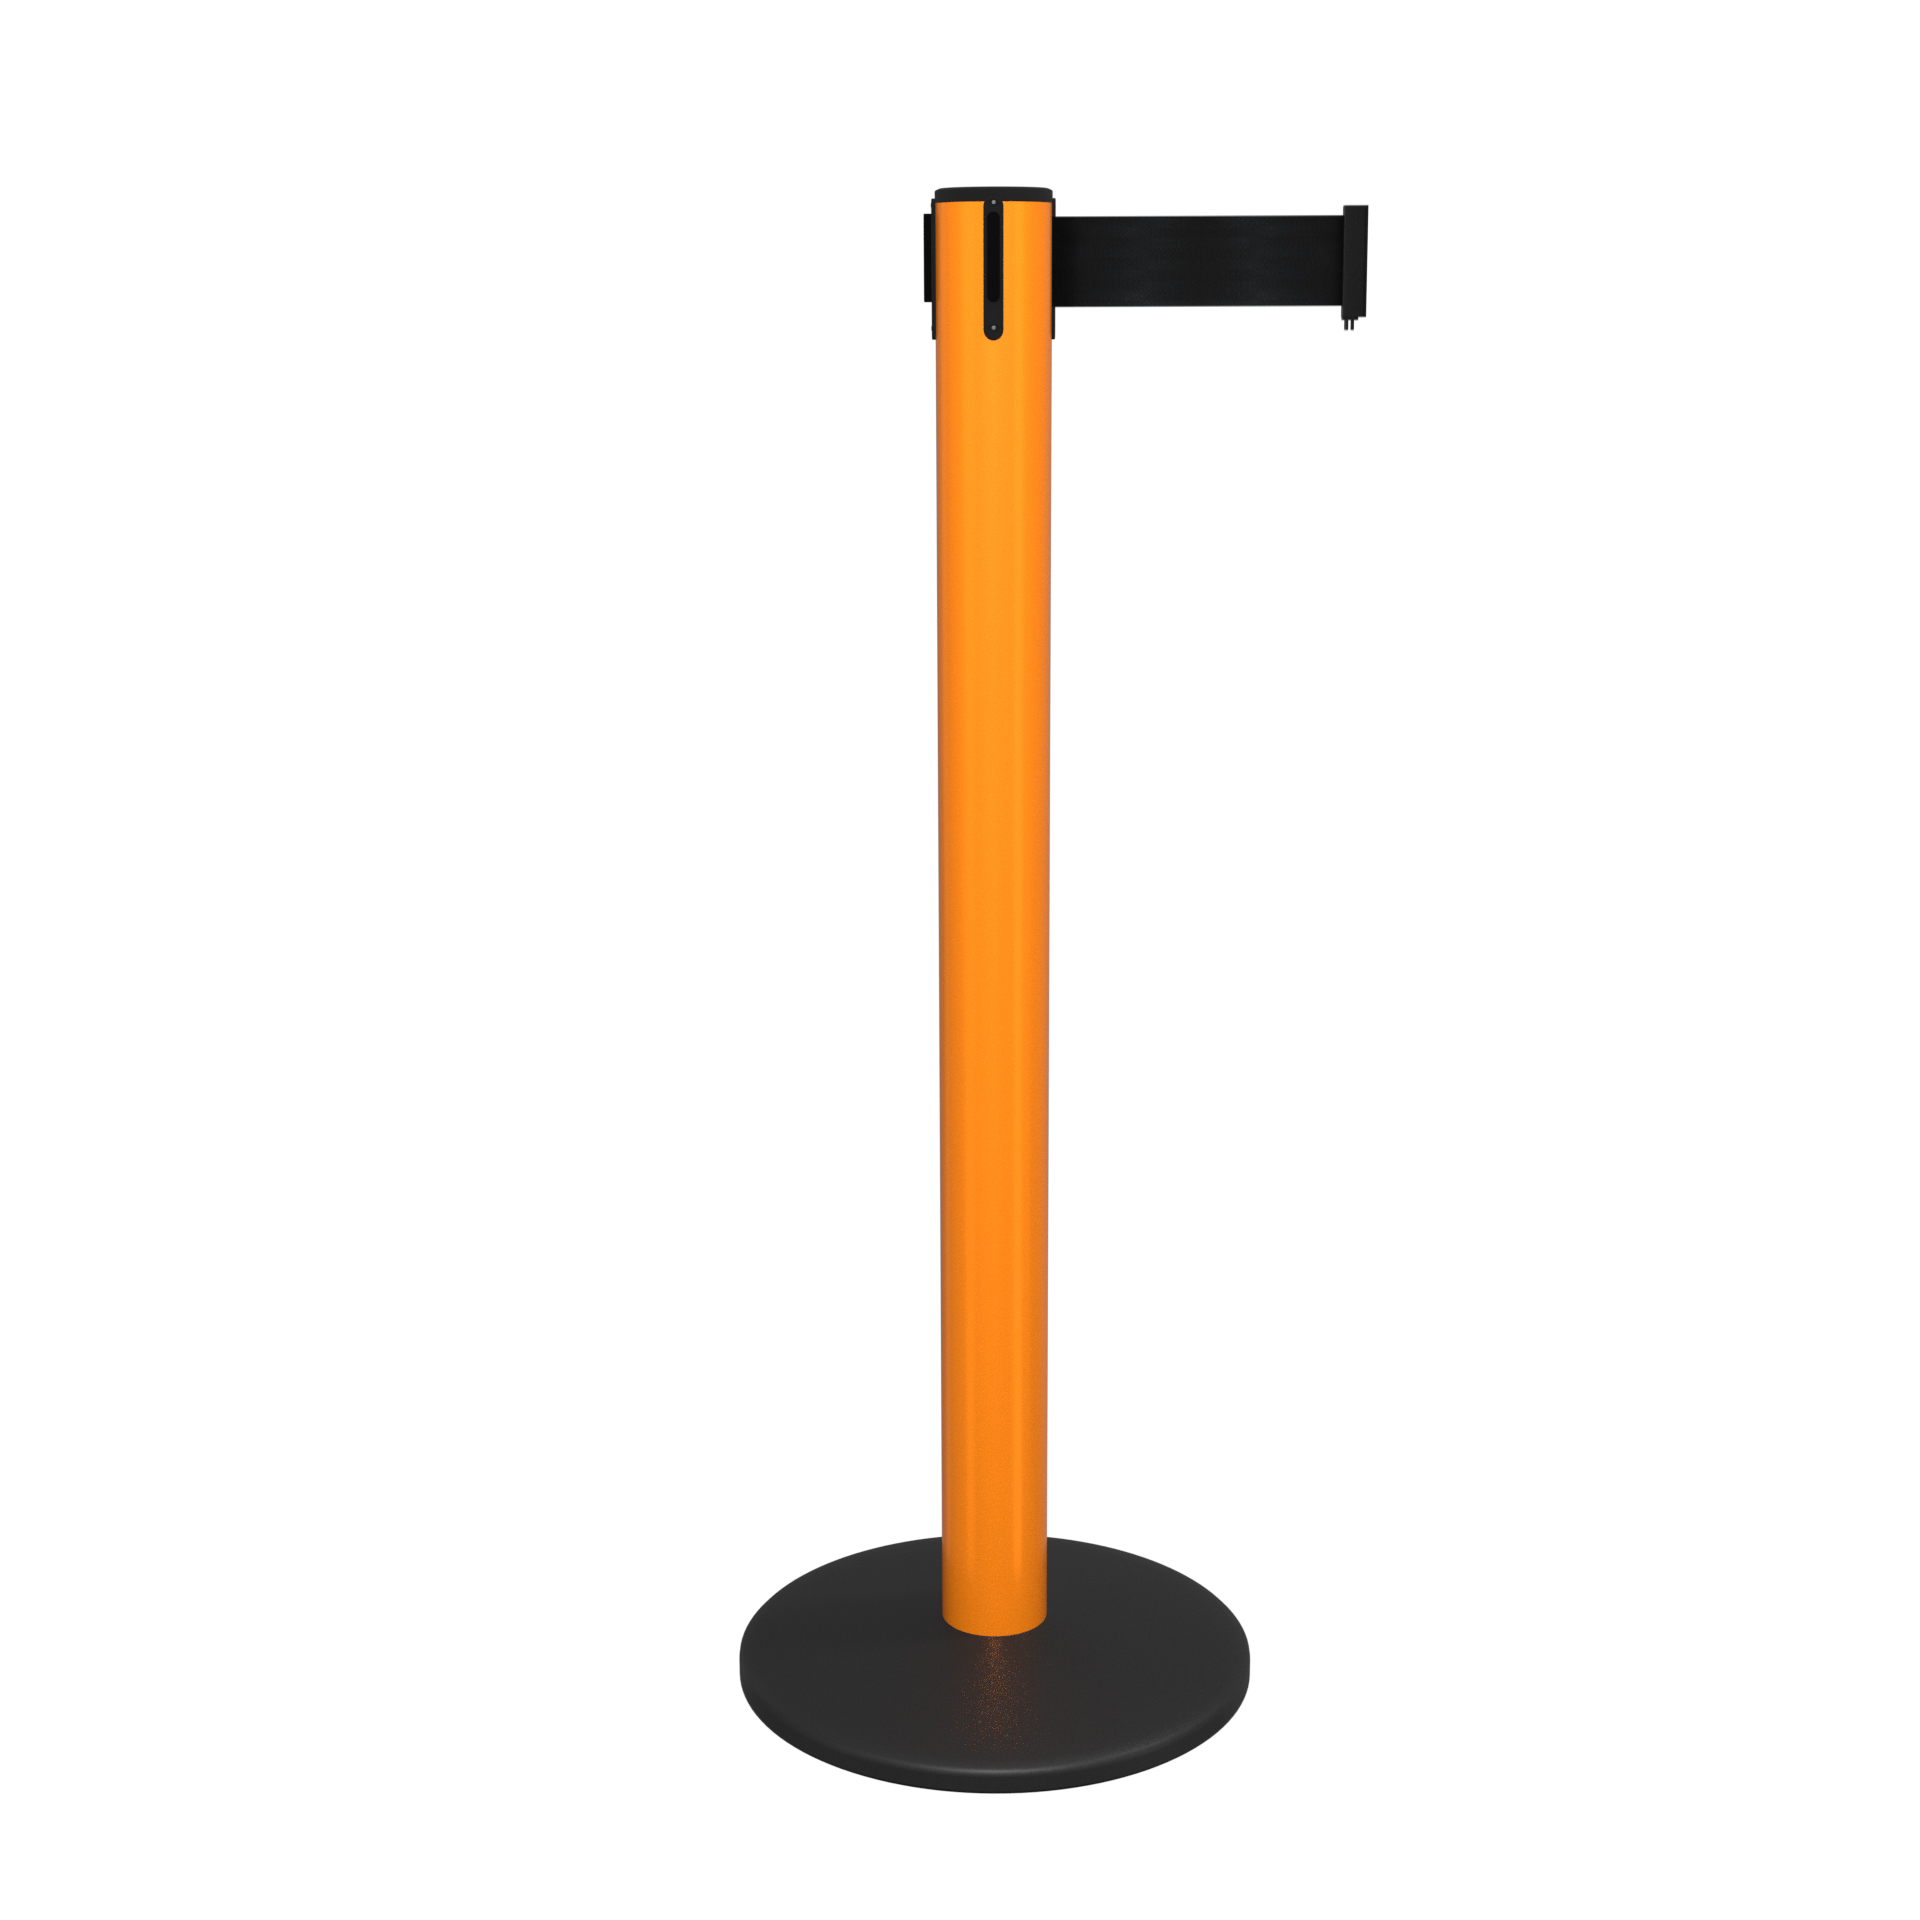 Orange SafetyPro 300 Retractable Belt Barrier